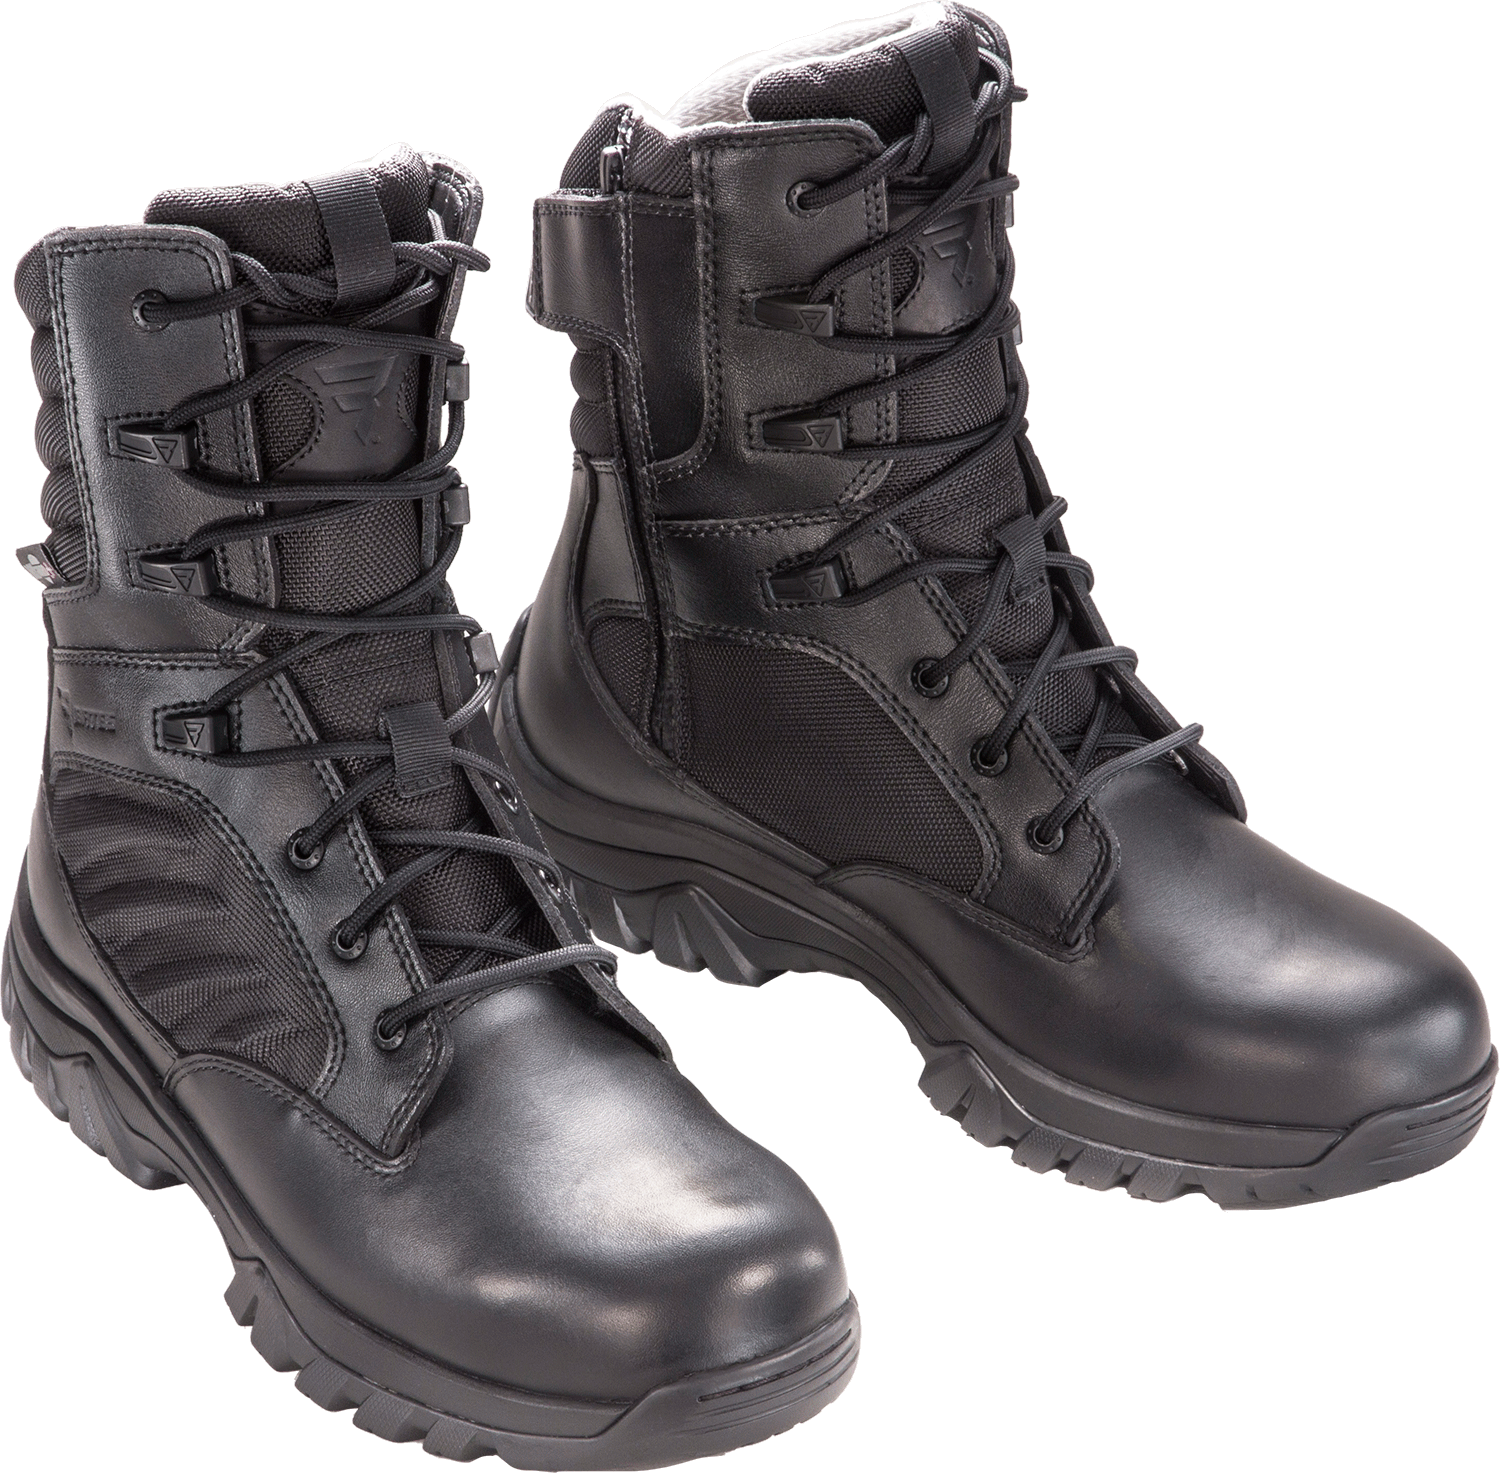 BATES　ベイツ　tactical boots タクティカルブーツ GX X2 TALL SIDE ZIP
DRYGuard＋ 